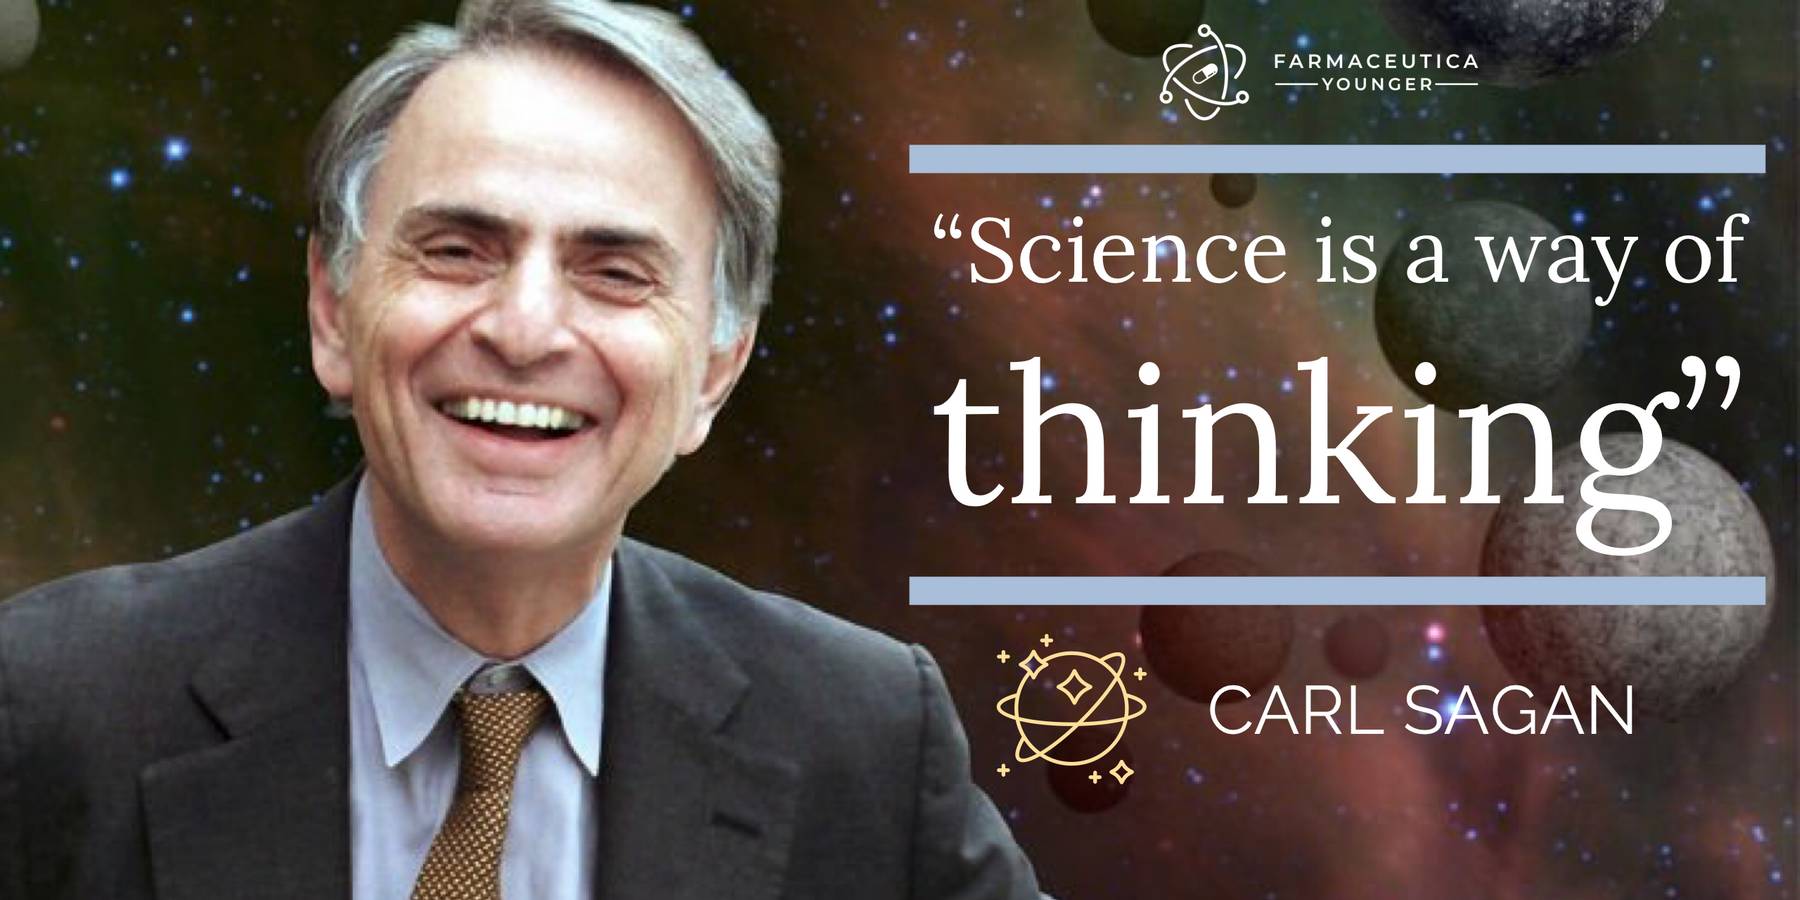 CARL SAGAN - "Science is a way of thinking"